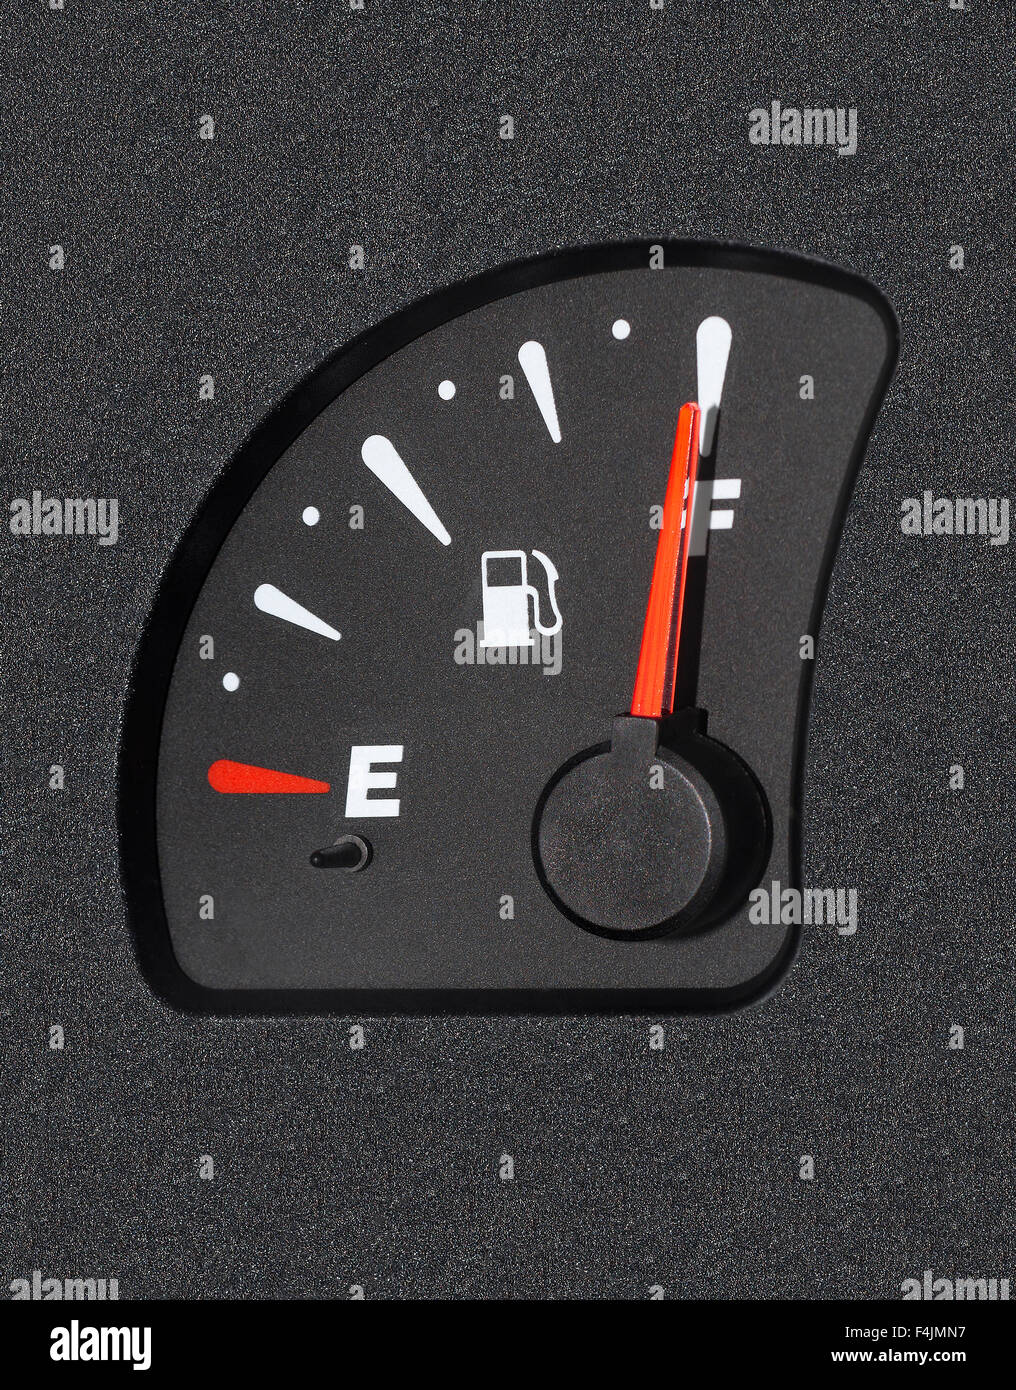 https://c8.alamy.com/compde/f4jmn7/ein-auto-kraftstoff-manometer-zeigt-vollen-tank-f4jmn7.jpg